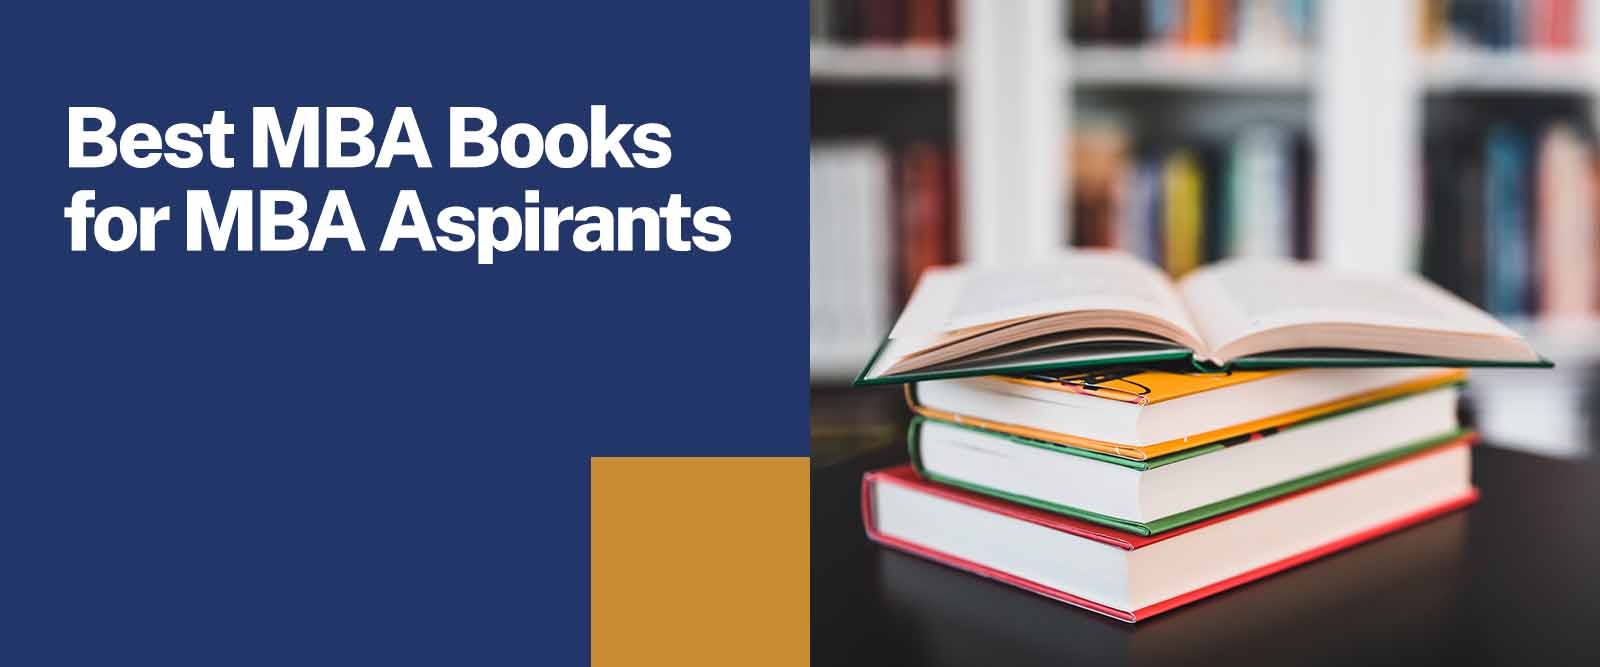 Best MBA Books for MBA Aspirants